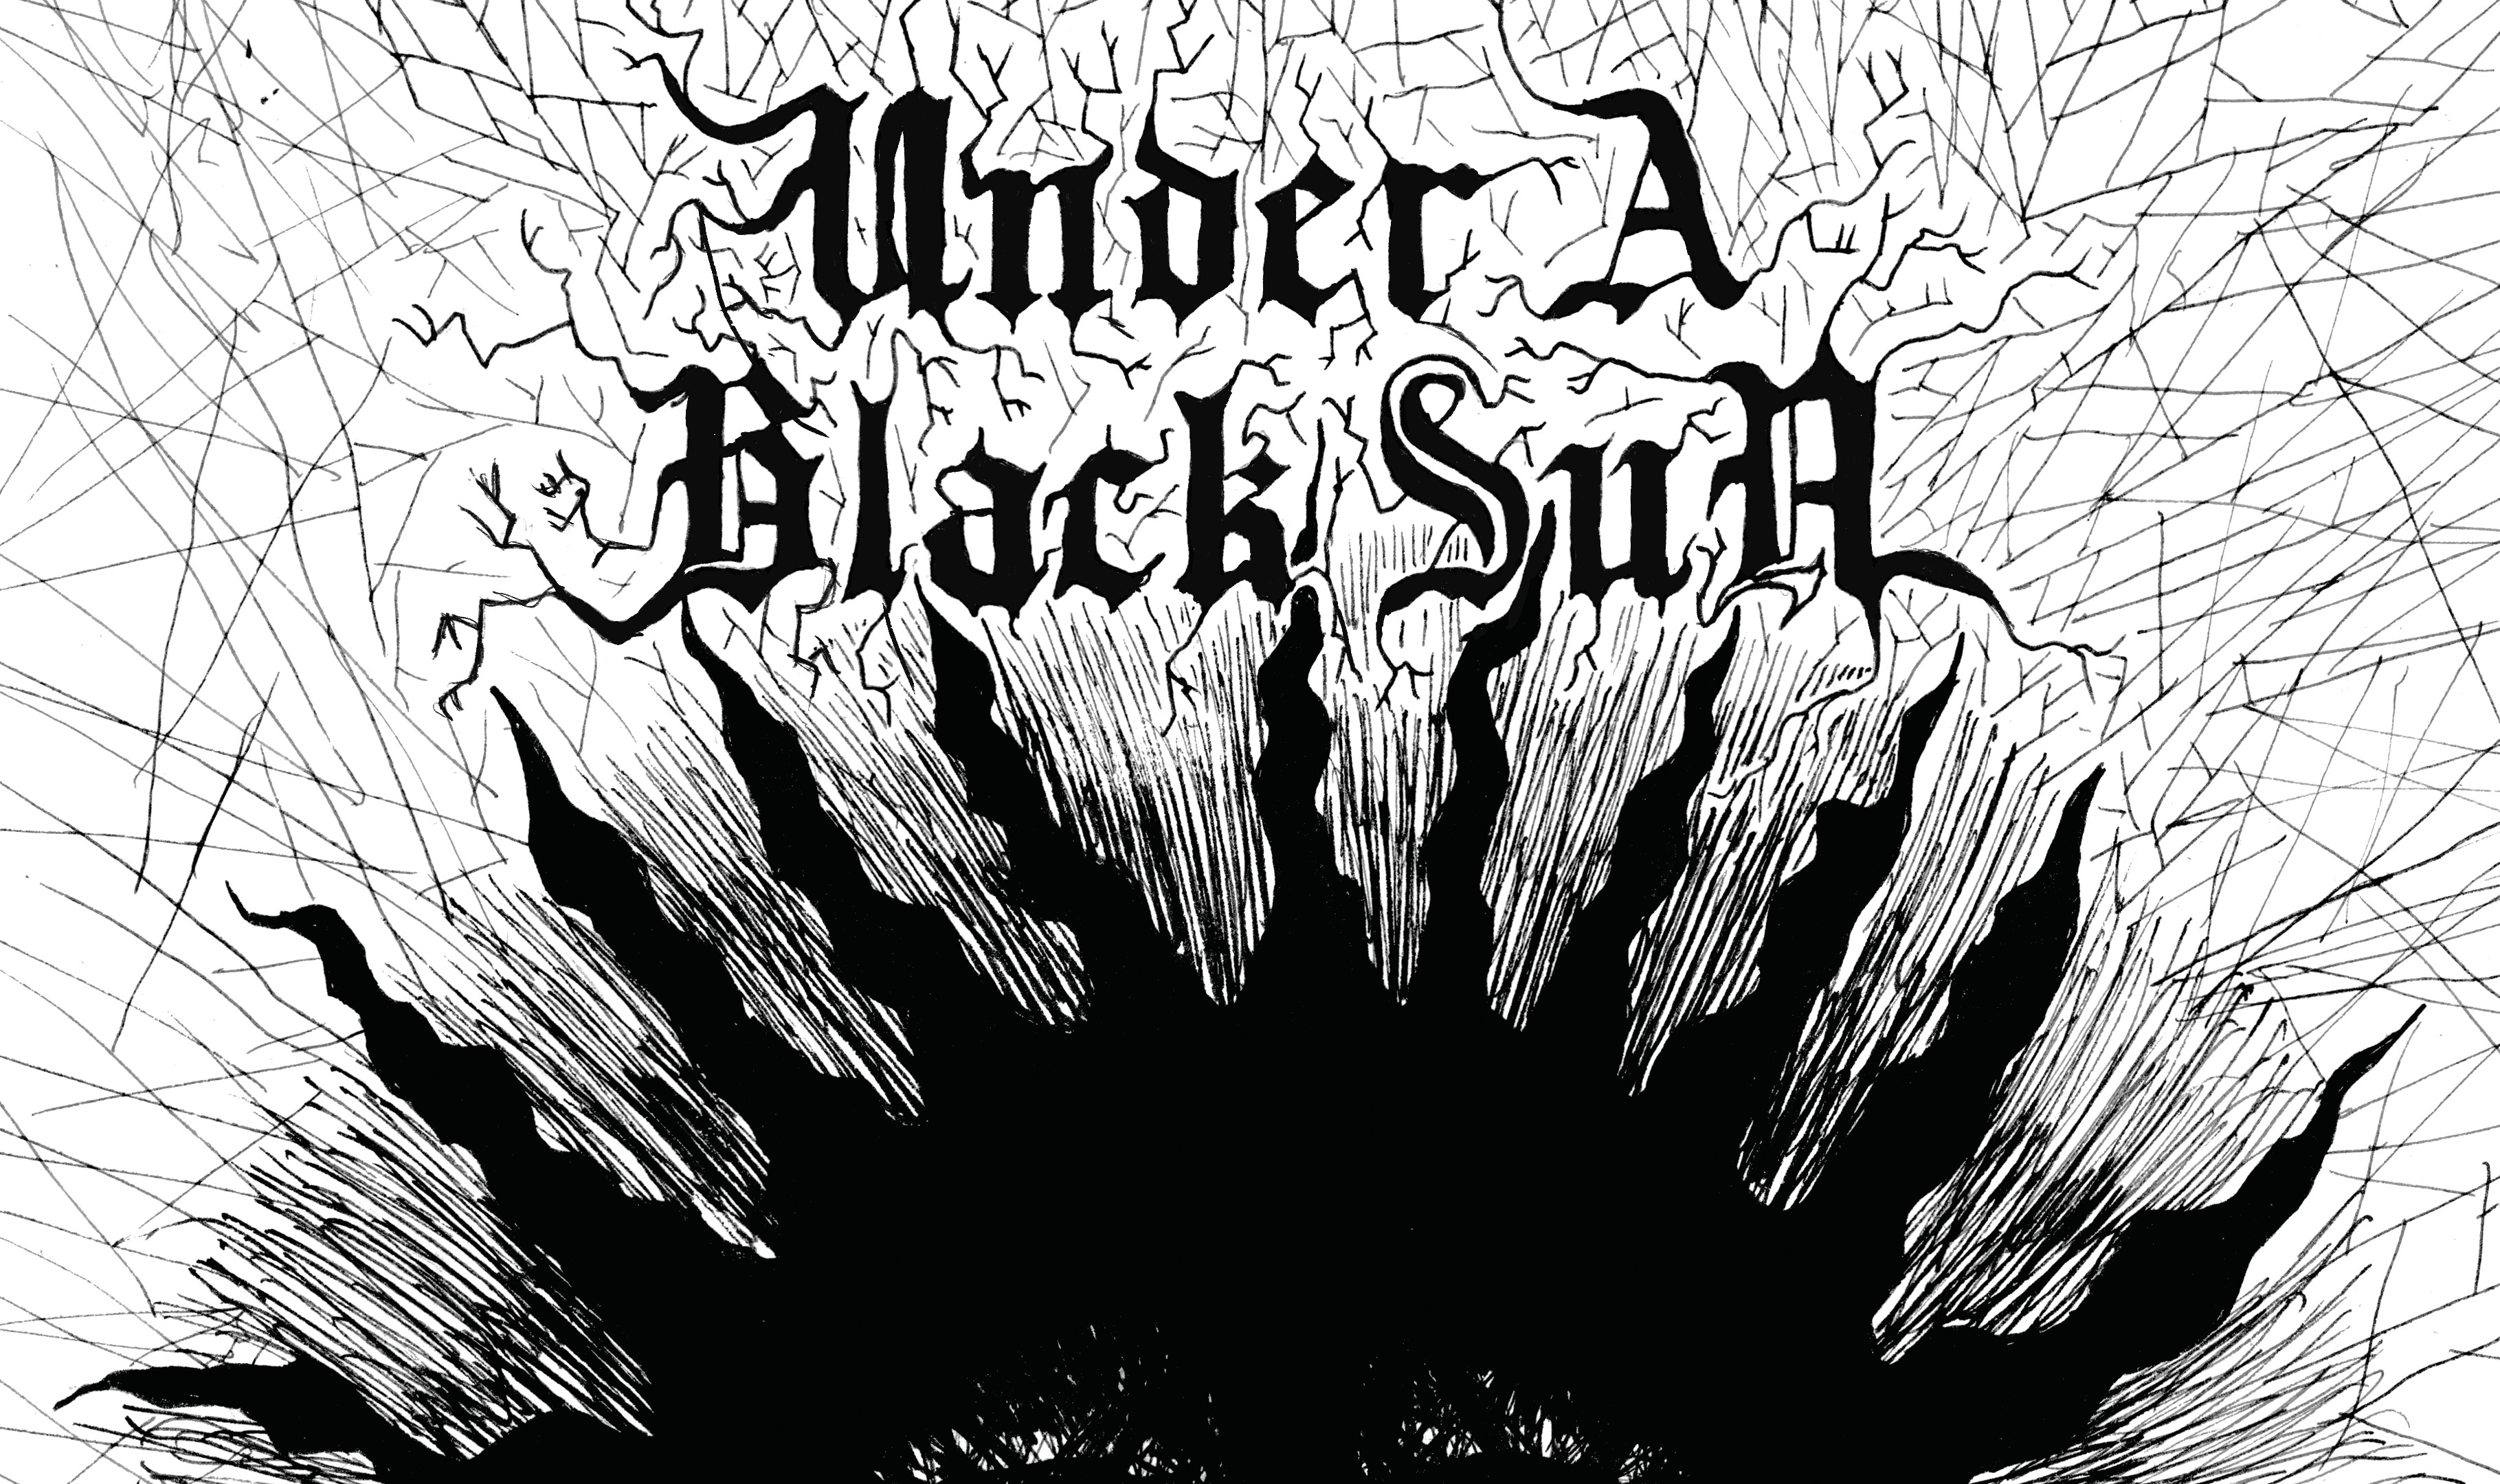 UNDER A BLACK SUN - A Digital Poetry Zine